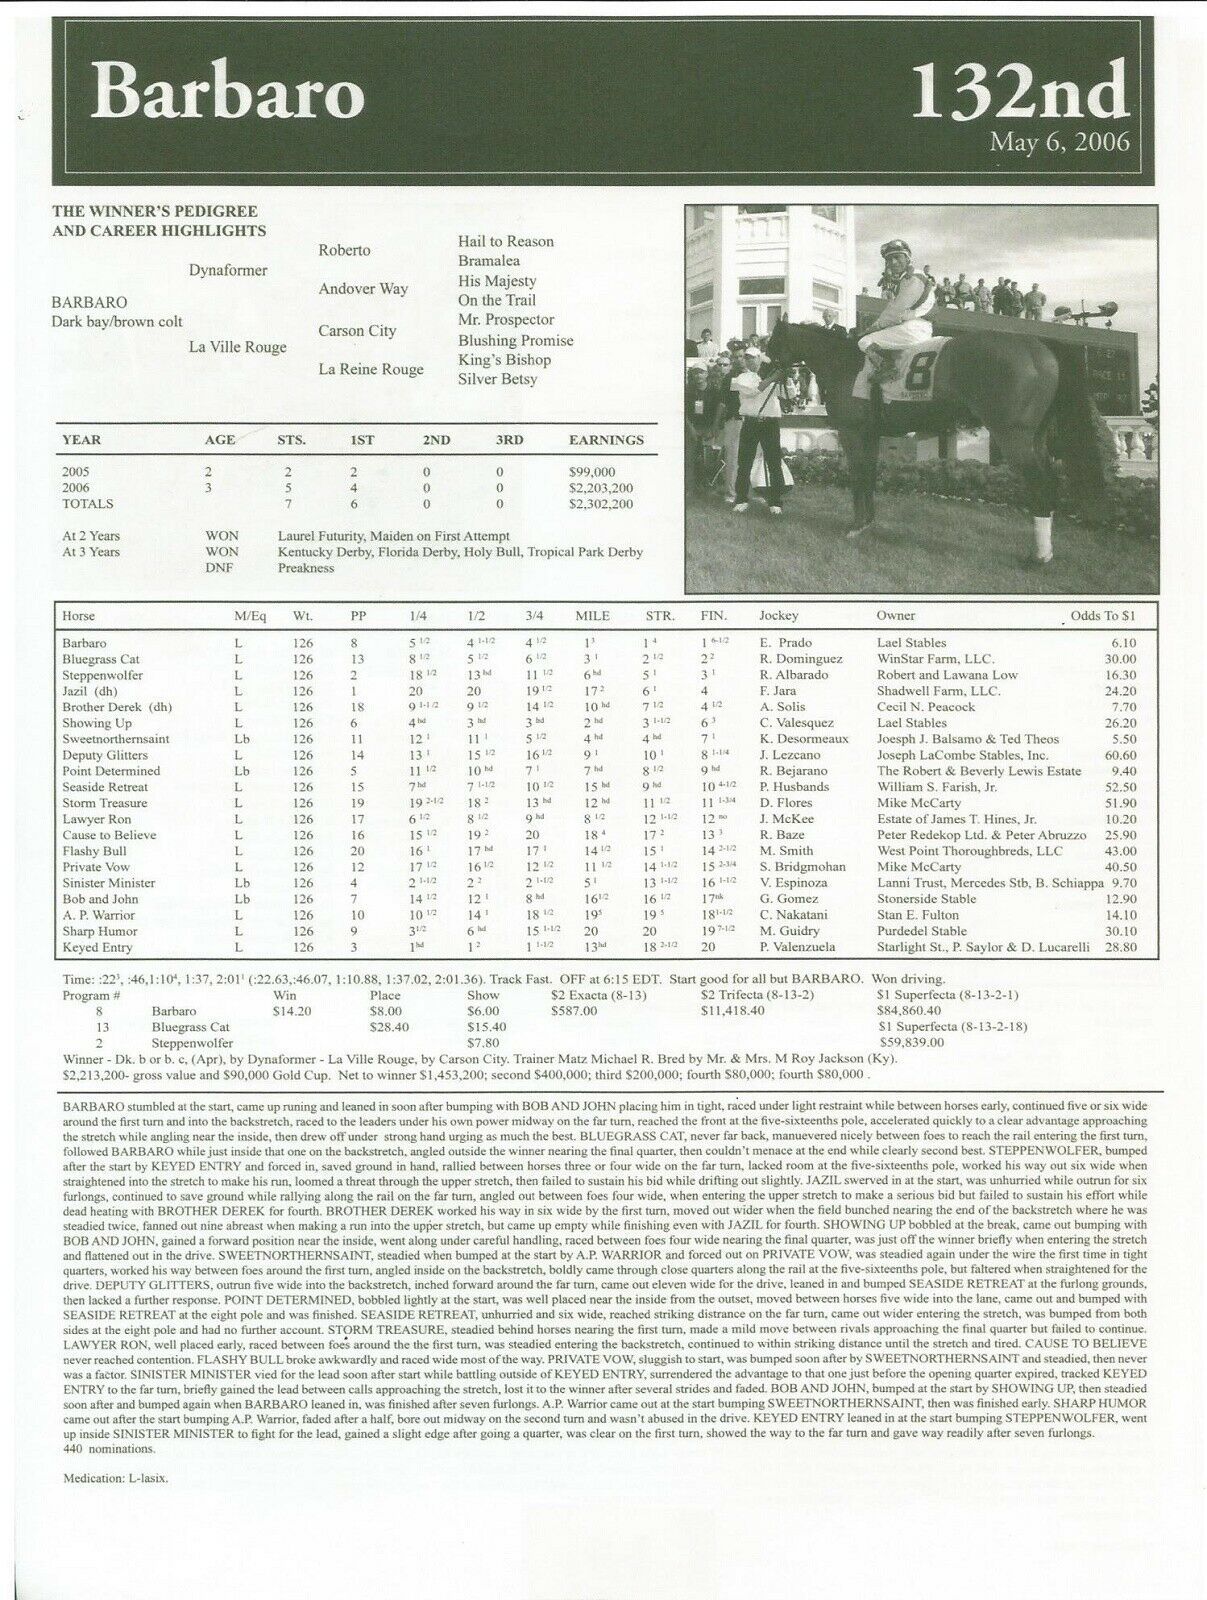 2006 BARBARO Kentucky Derby Race Chart, Pedigree & Career